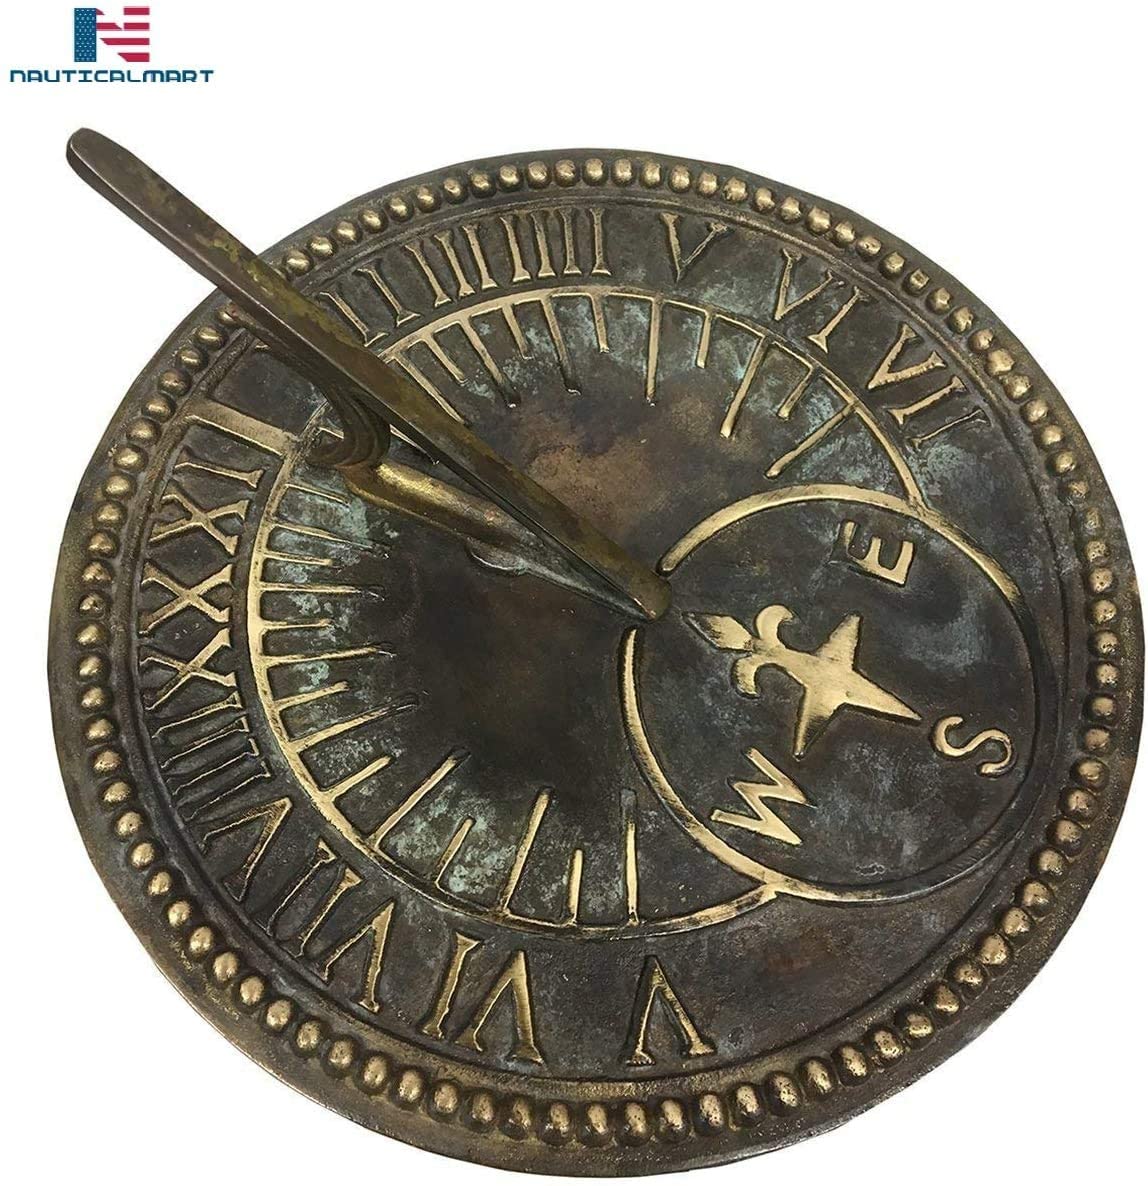 NauticalMart Roman Sundial, Solid Brass with Light Verdi Highlights, 8-Inch Diameter - image 1 of 4